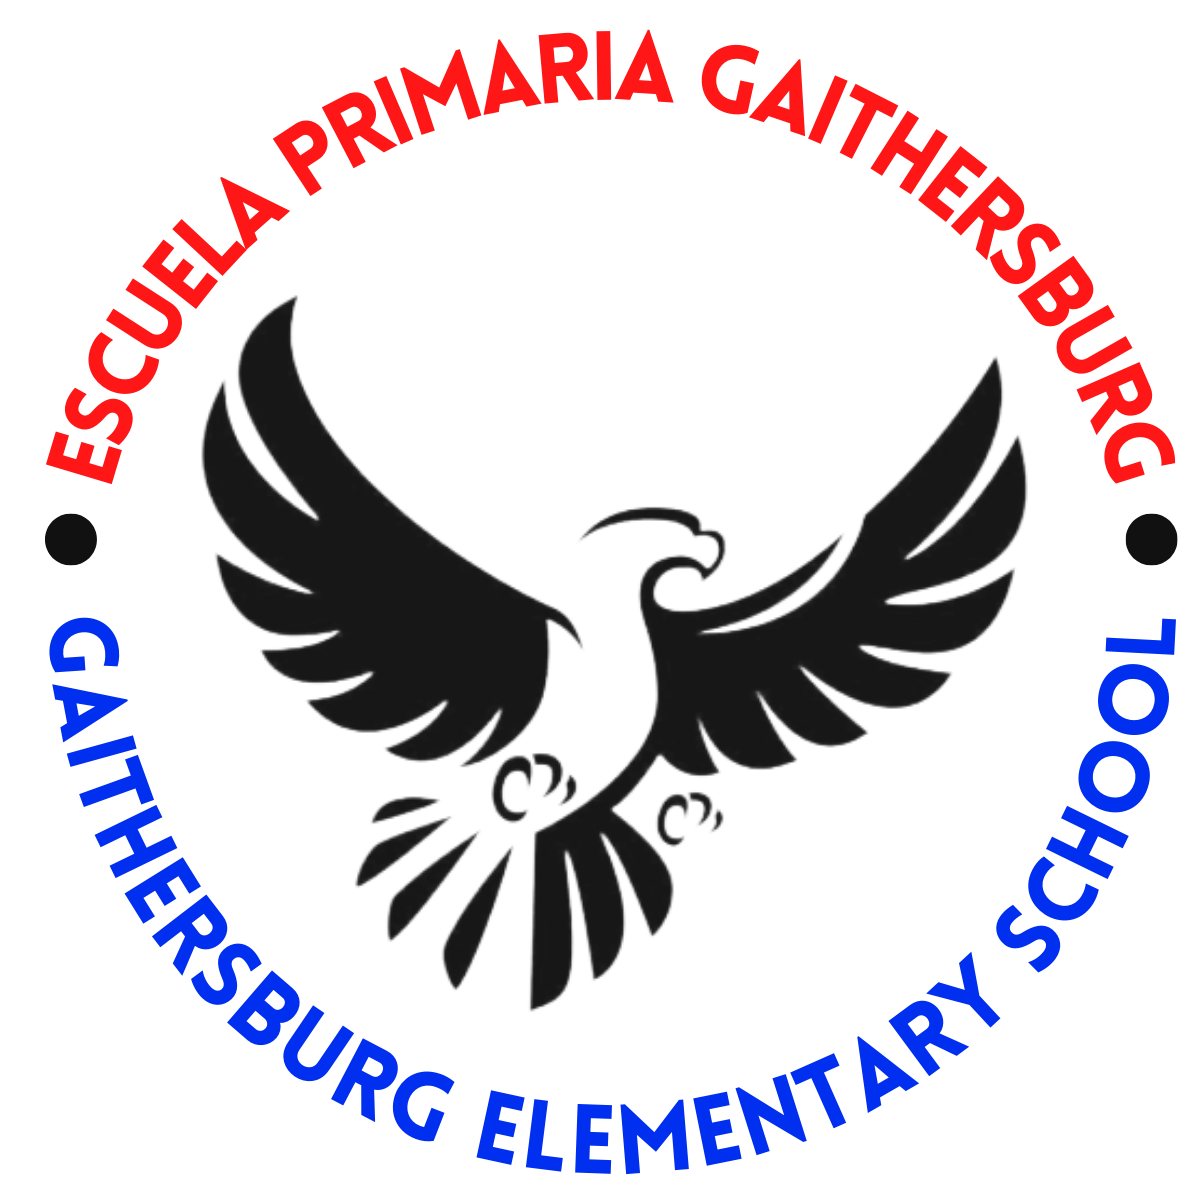 Escuela la primaria Gaithersburg, Gaithersburg Elementary School Eagle Logo